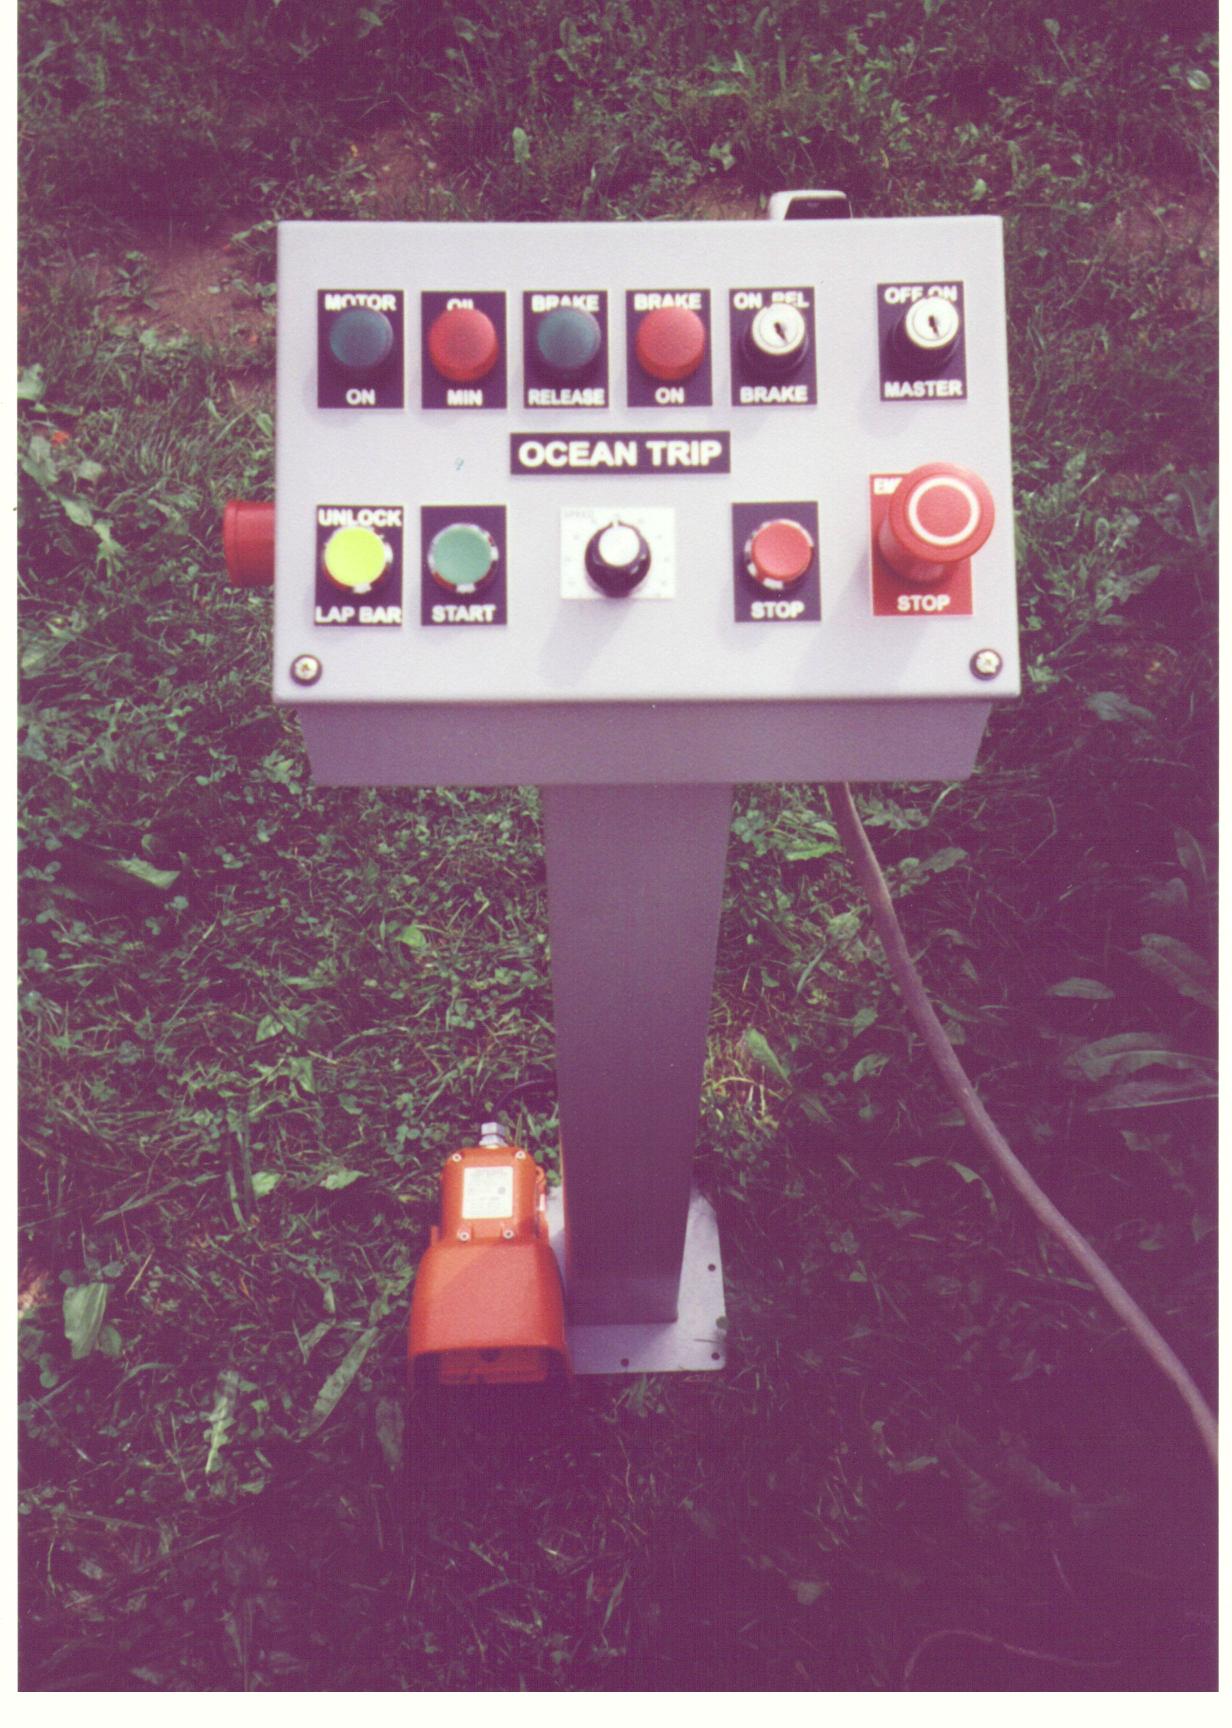 Sample of an AAR control panel